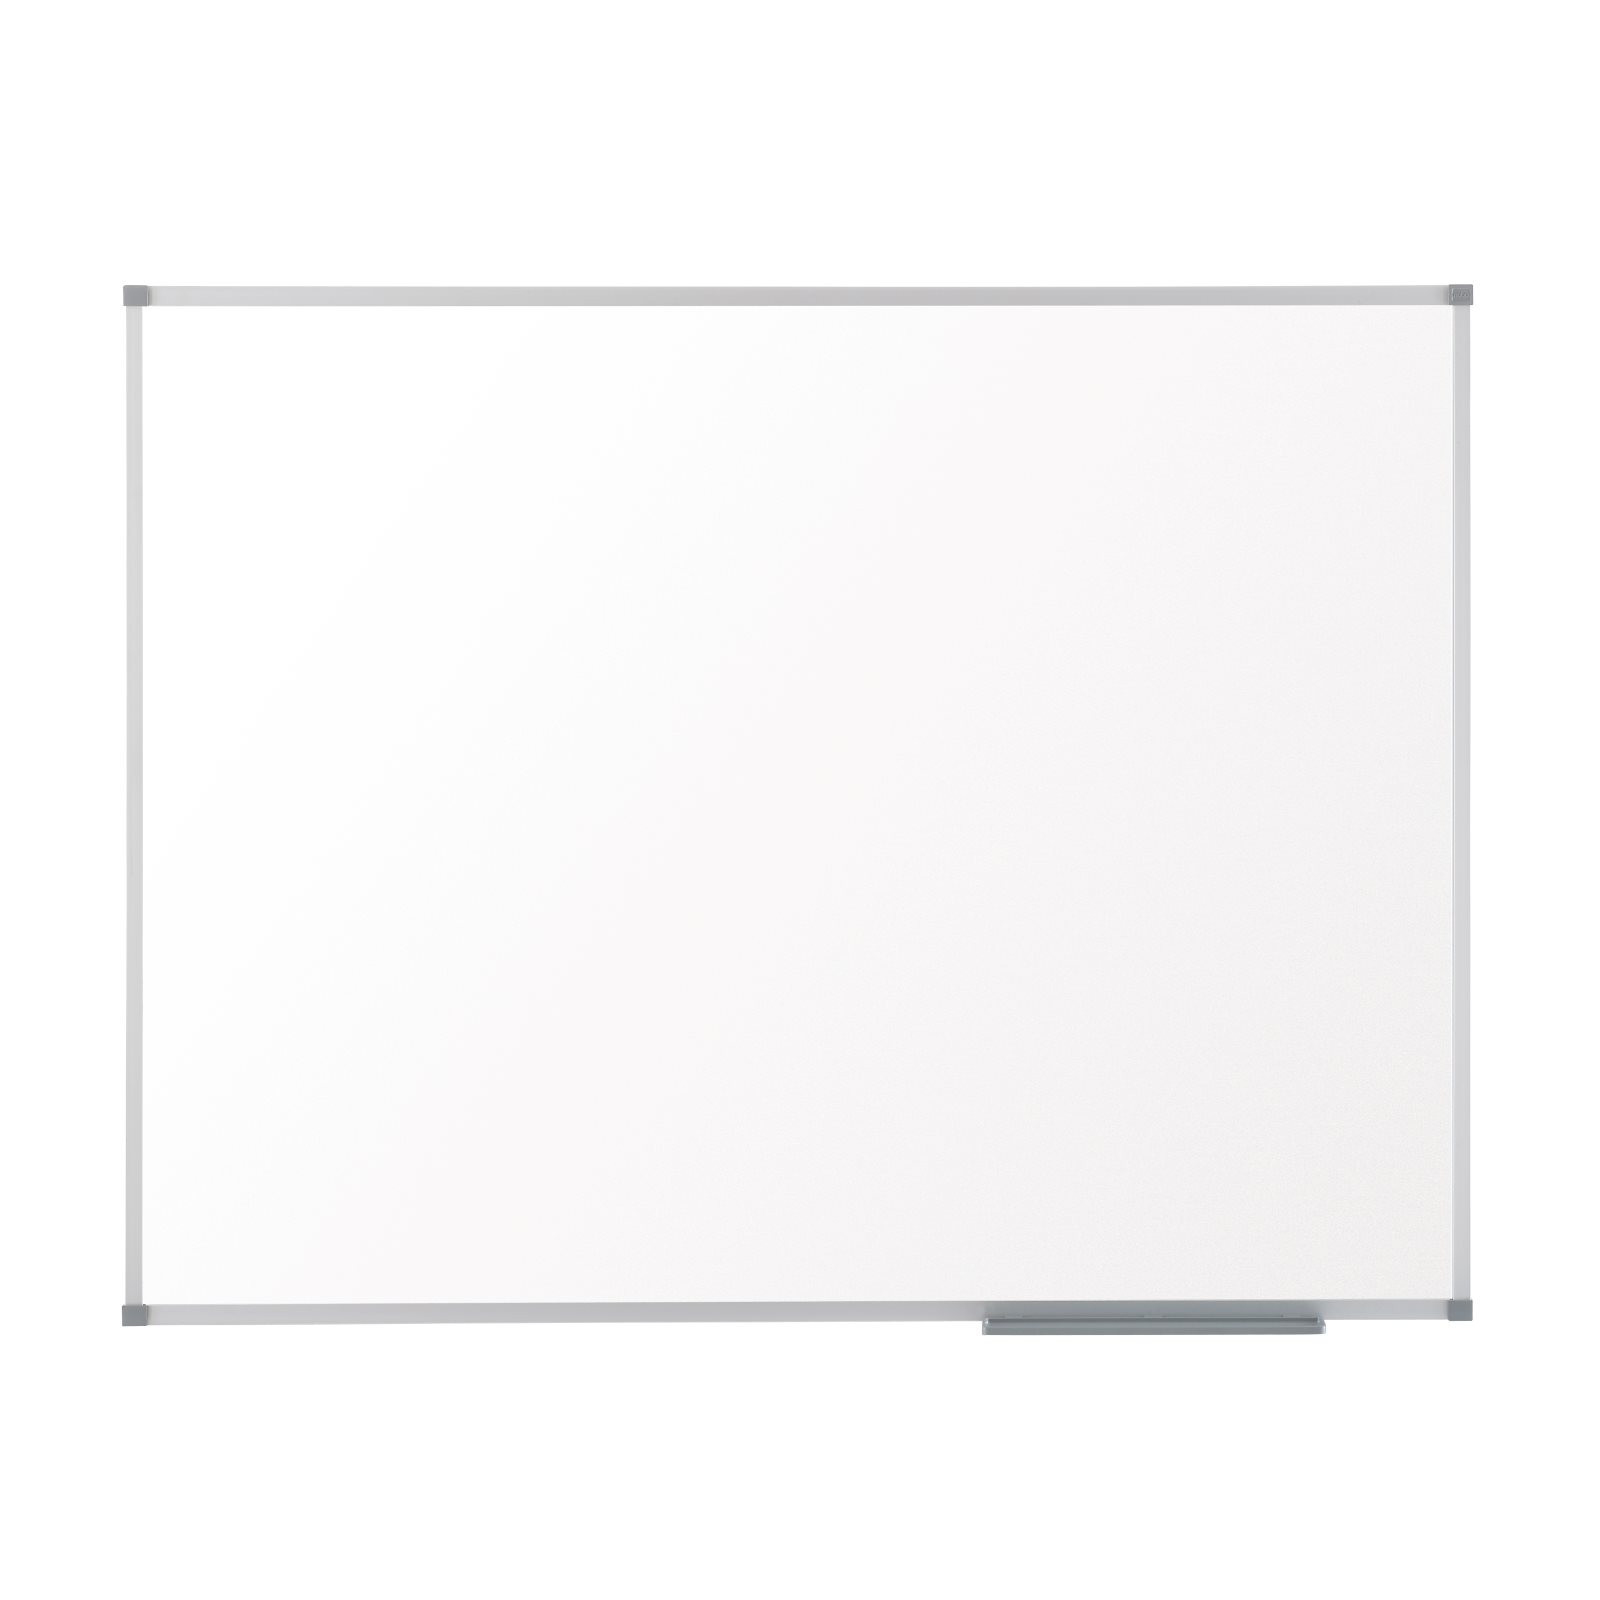 Photos - Dry Erase Board / Flipchart Nobo Basic Steel Magnetic Whiteboard 1800x1200mm with Basic Trim 1905213 